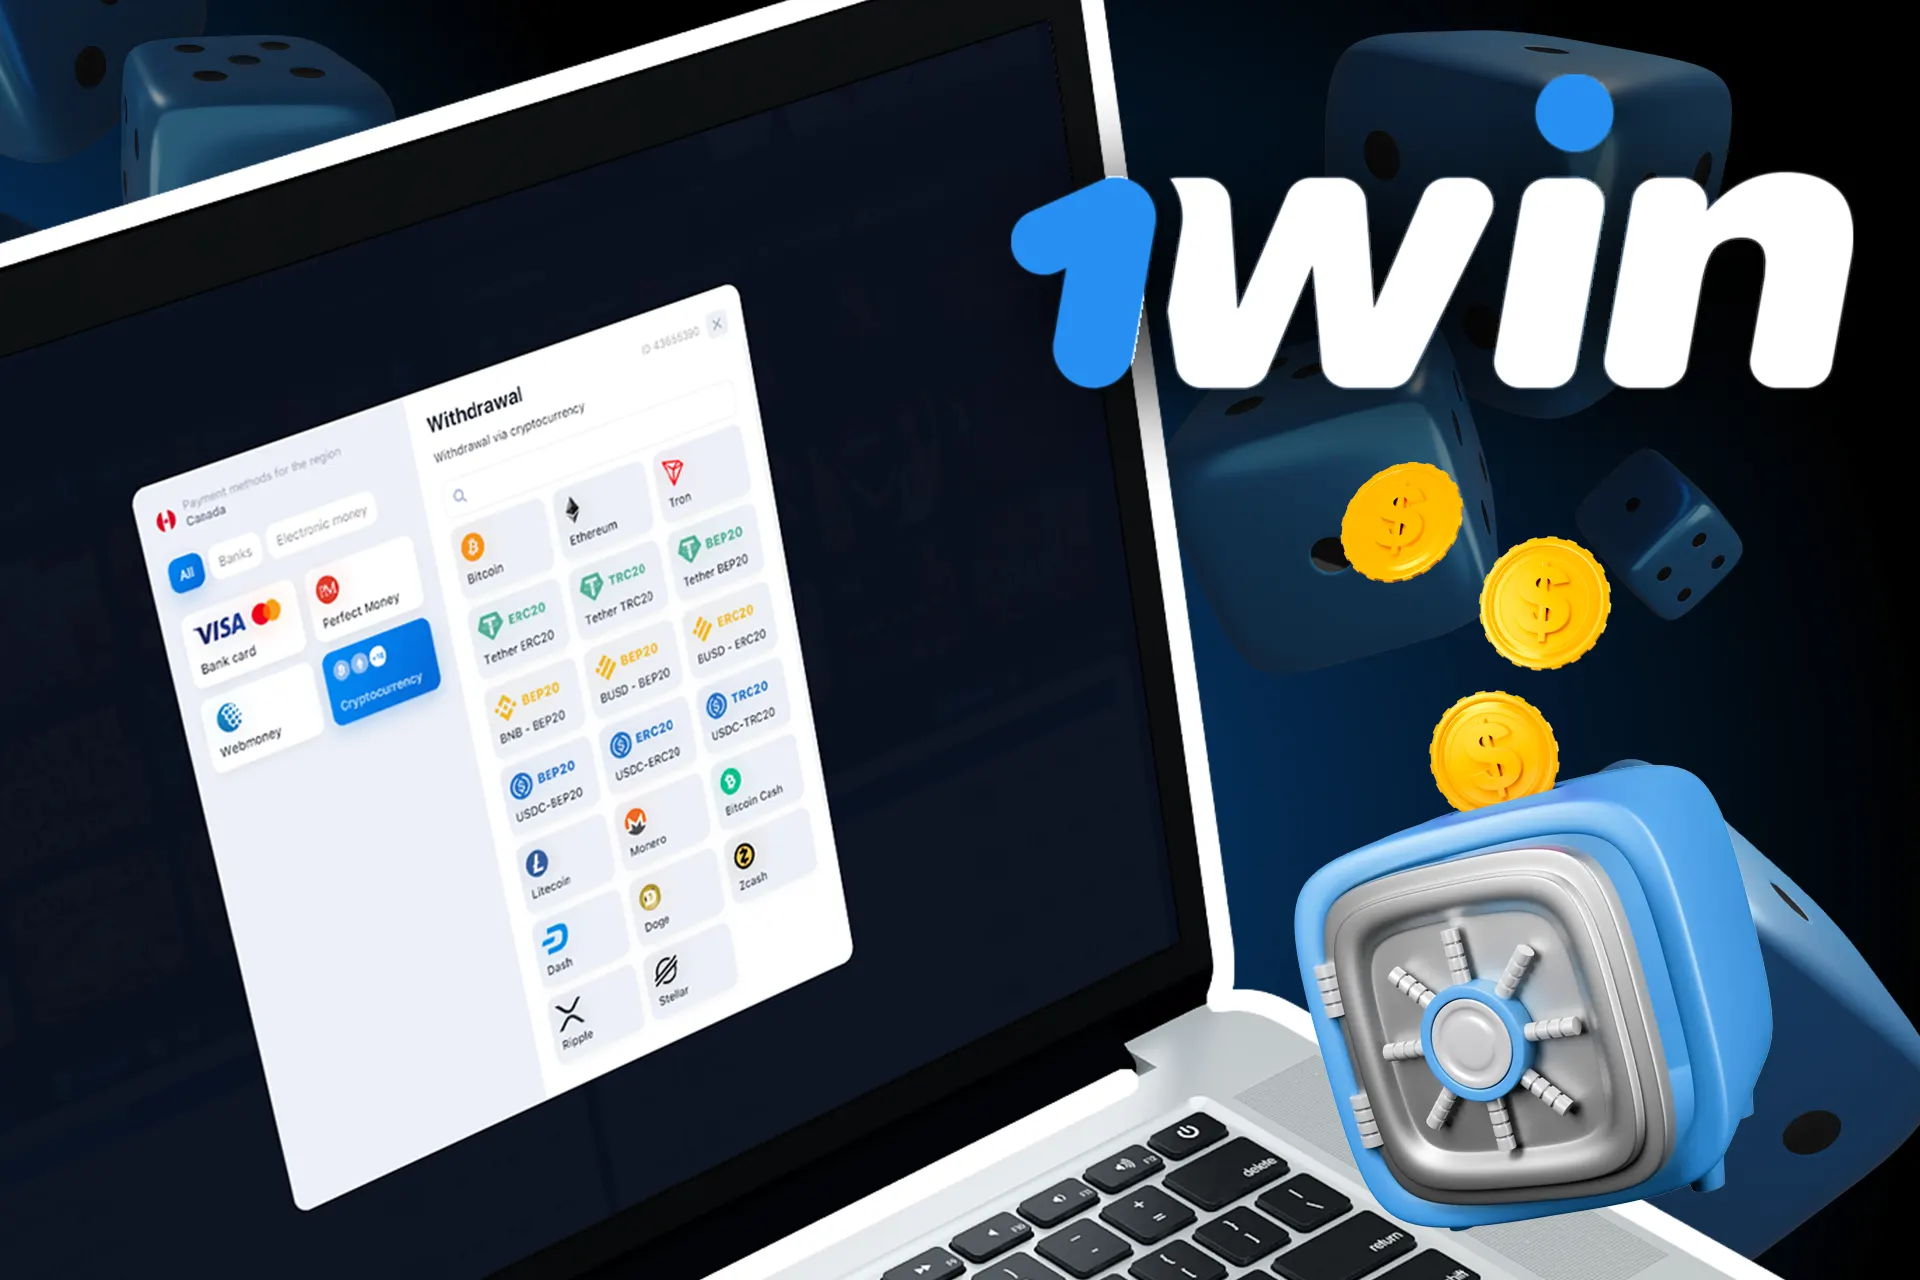 Receive your winnings on 1win.